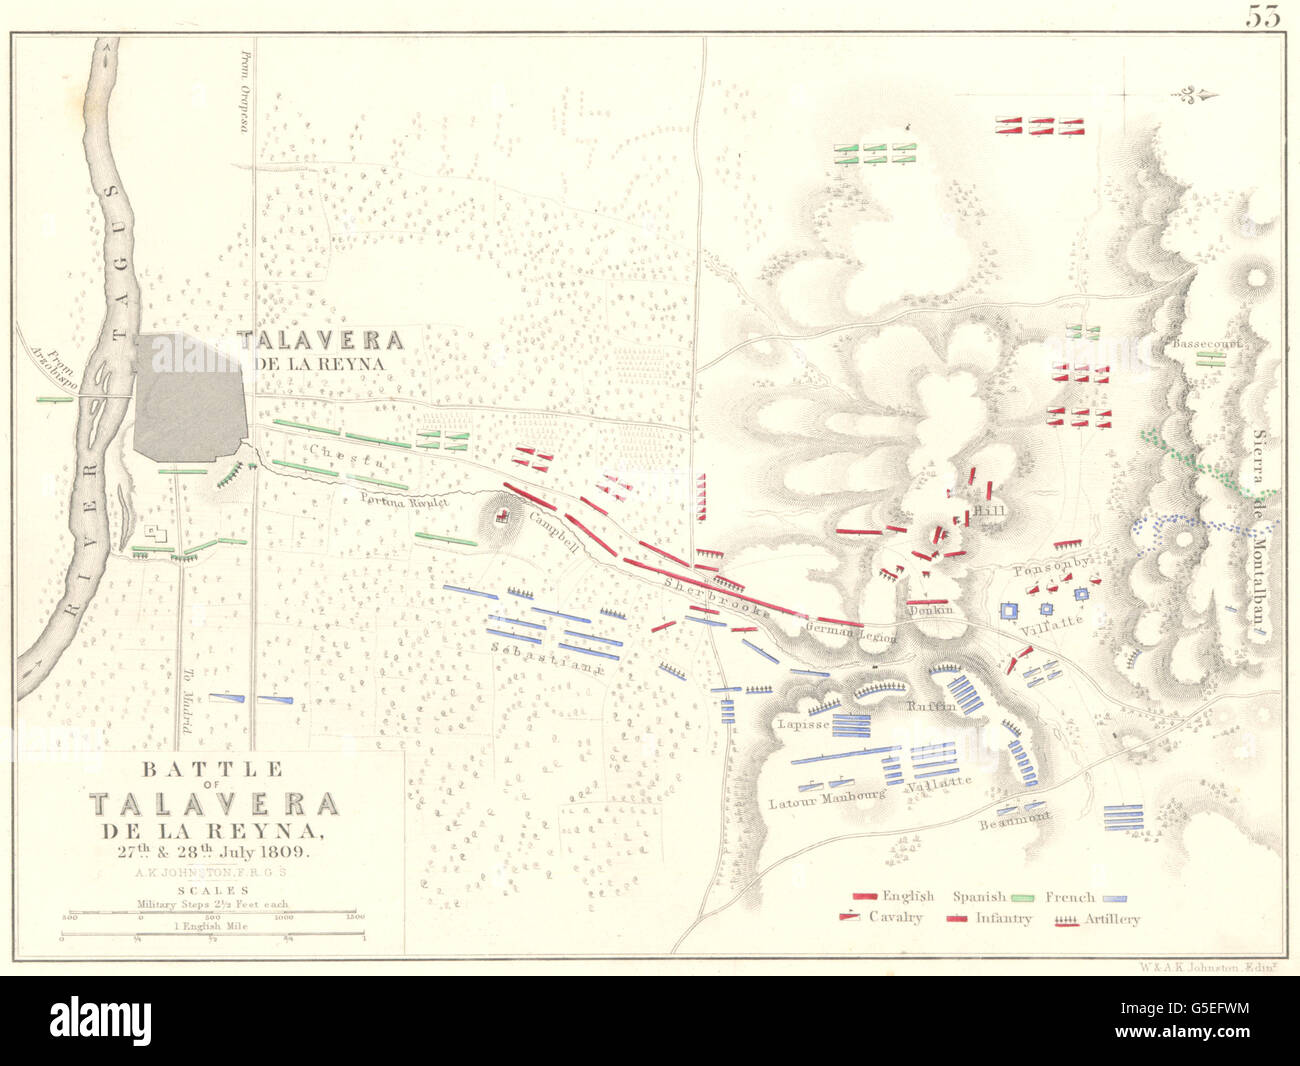 BATTLE OF TALAVERA DE LA REYNA: 27th & 28th July 1809. Spain, 1848 antique map Stock Photo